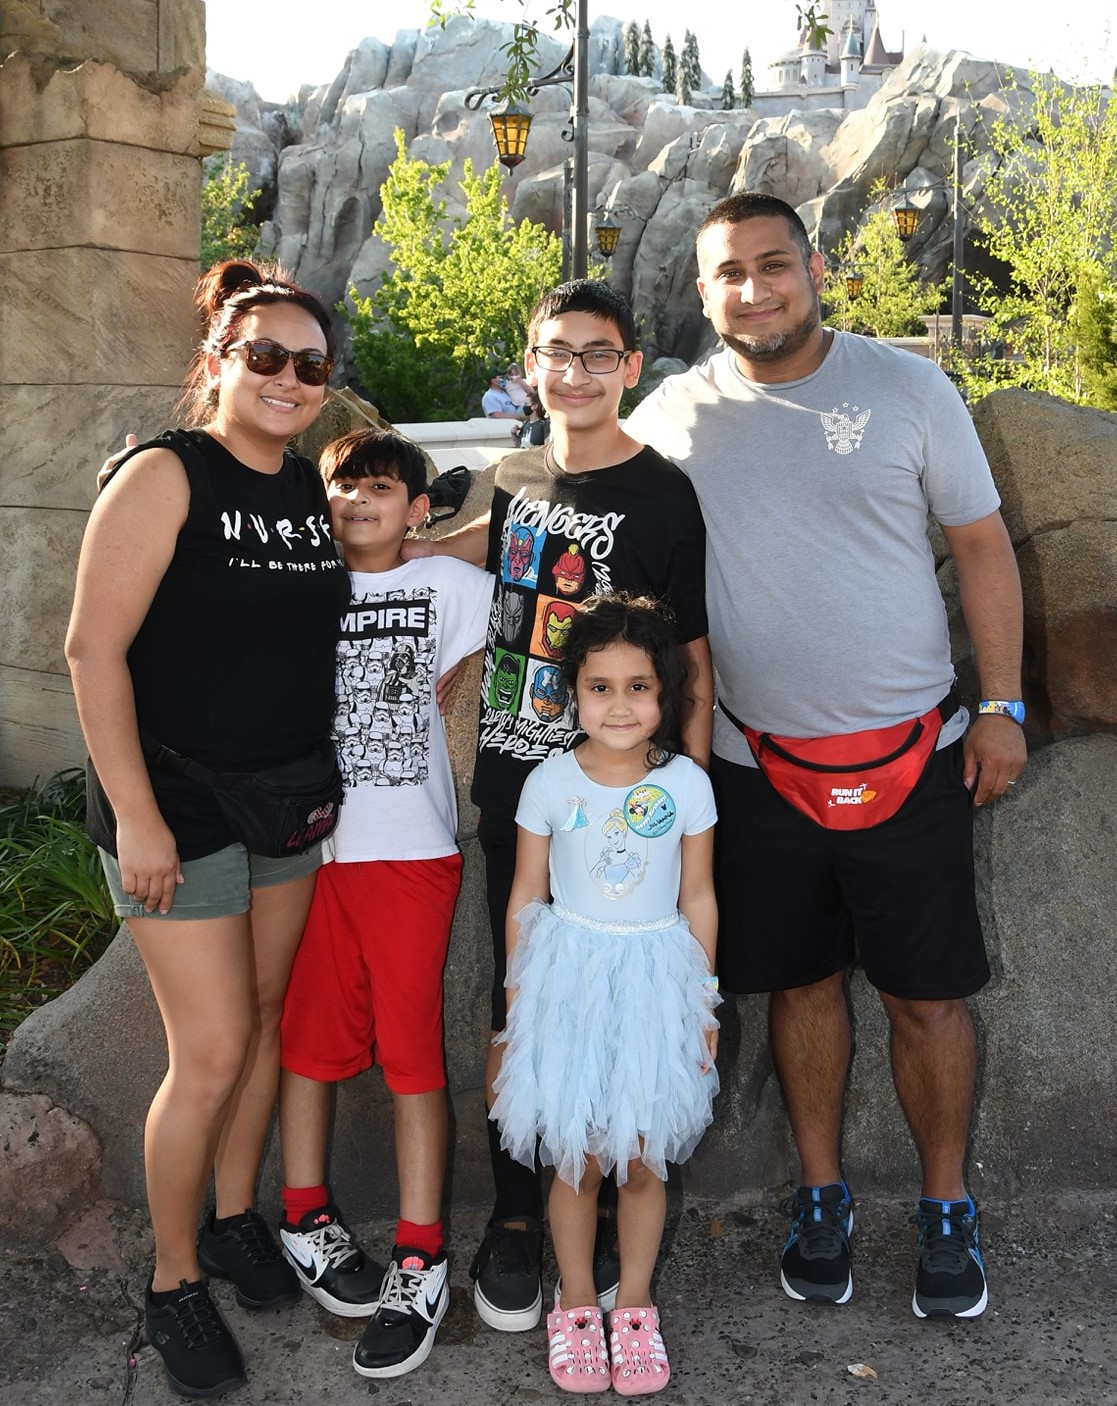 Juanita, Robert, Dominic Jr, Julianna, and Dominic Sr. on vacation at Disney World